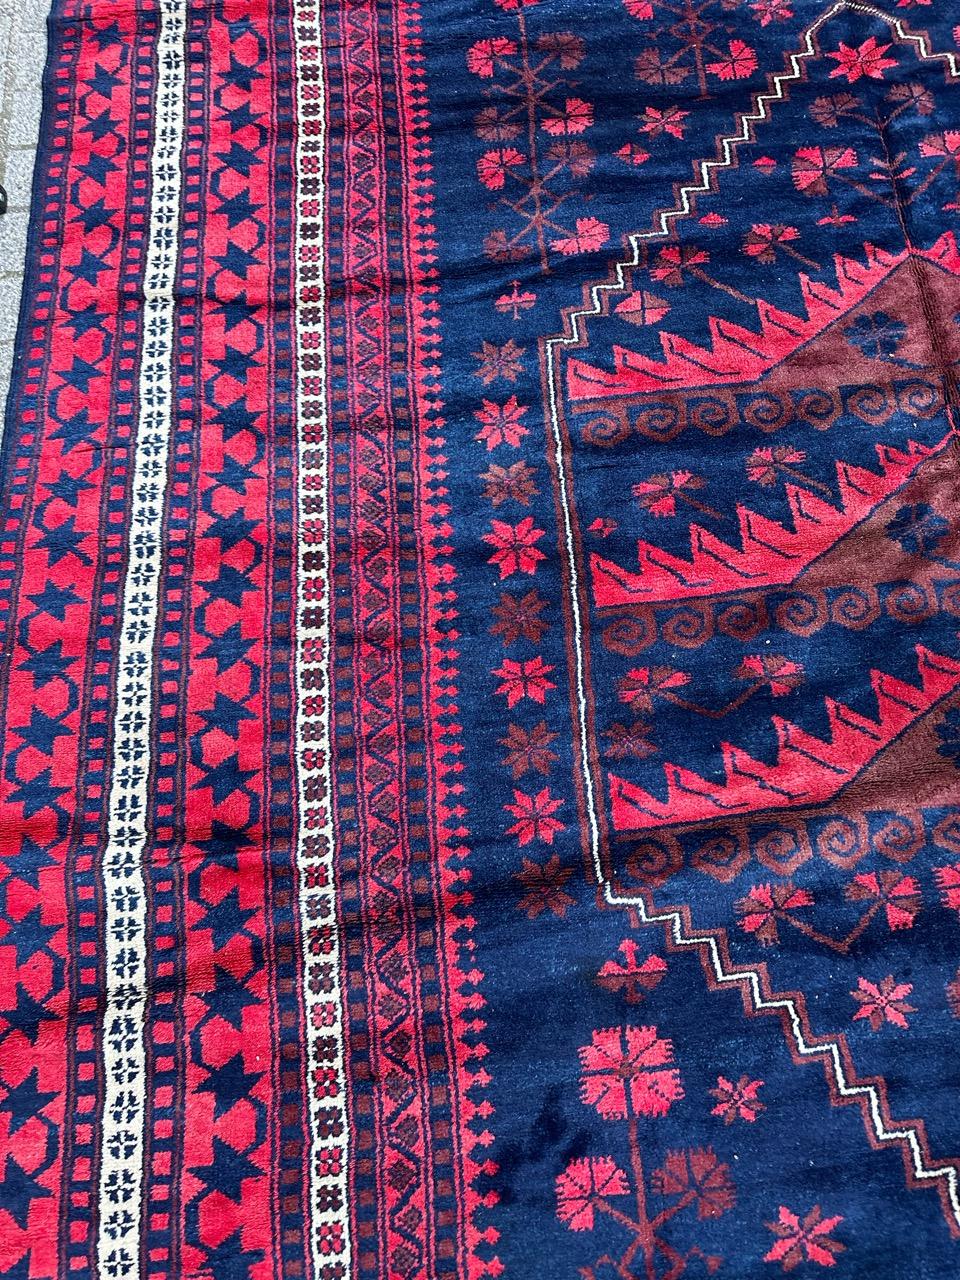 Wool Bobyrug’s nice large vintage Turkish rug For Sale